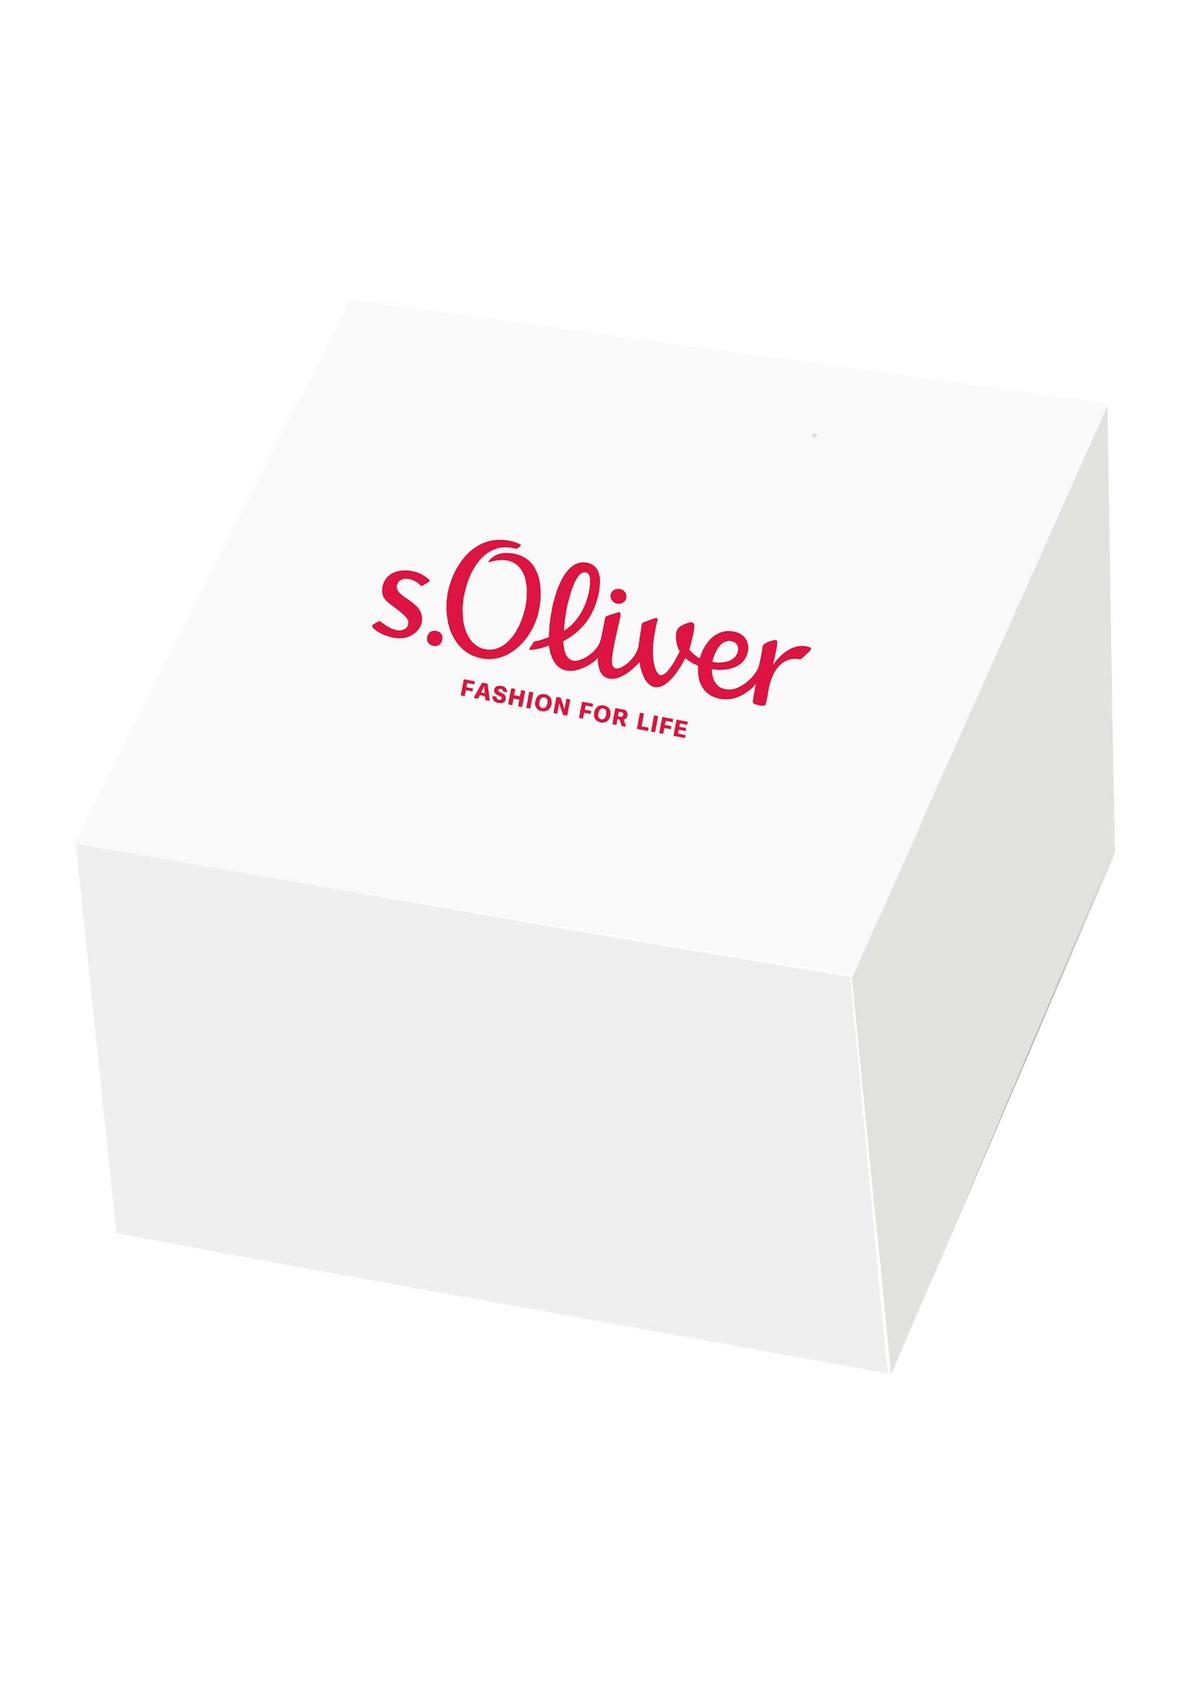 s.Oliver Textilband-Armbanduhr mit Fußball-Motiv